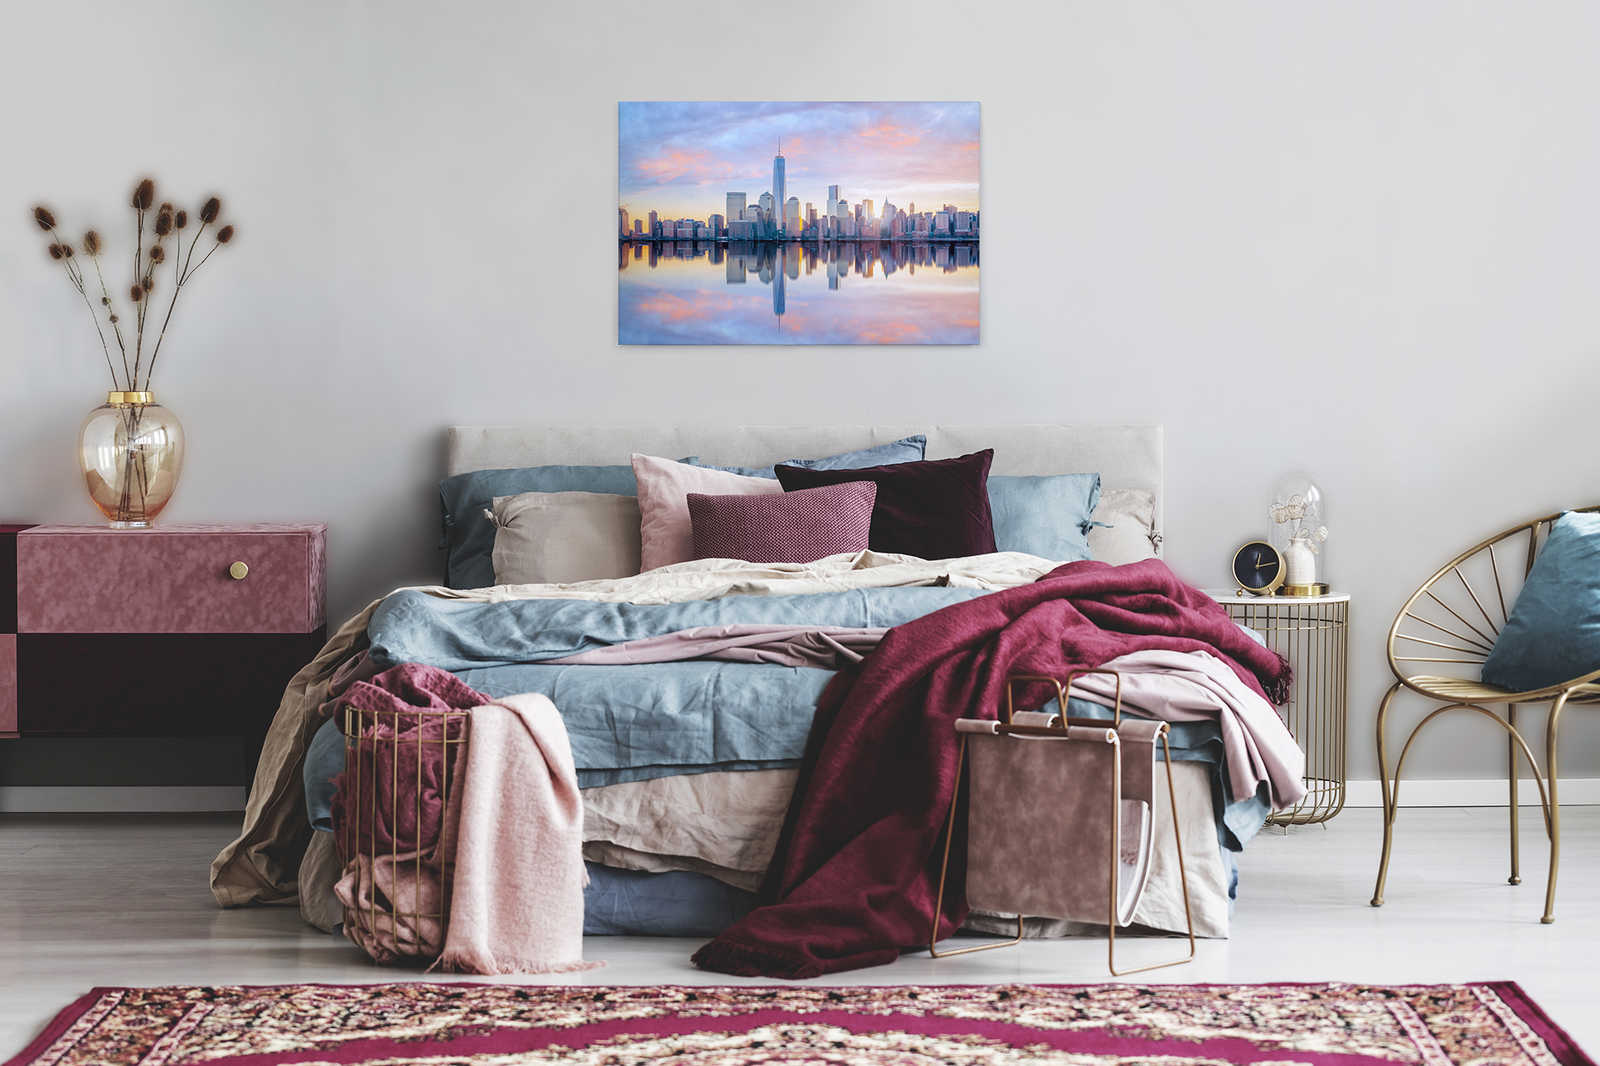             Canvas New York Morning Skyline - 0,90 m x 0,60 m
        